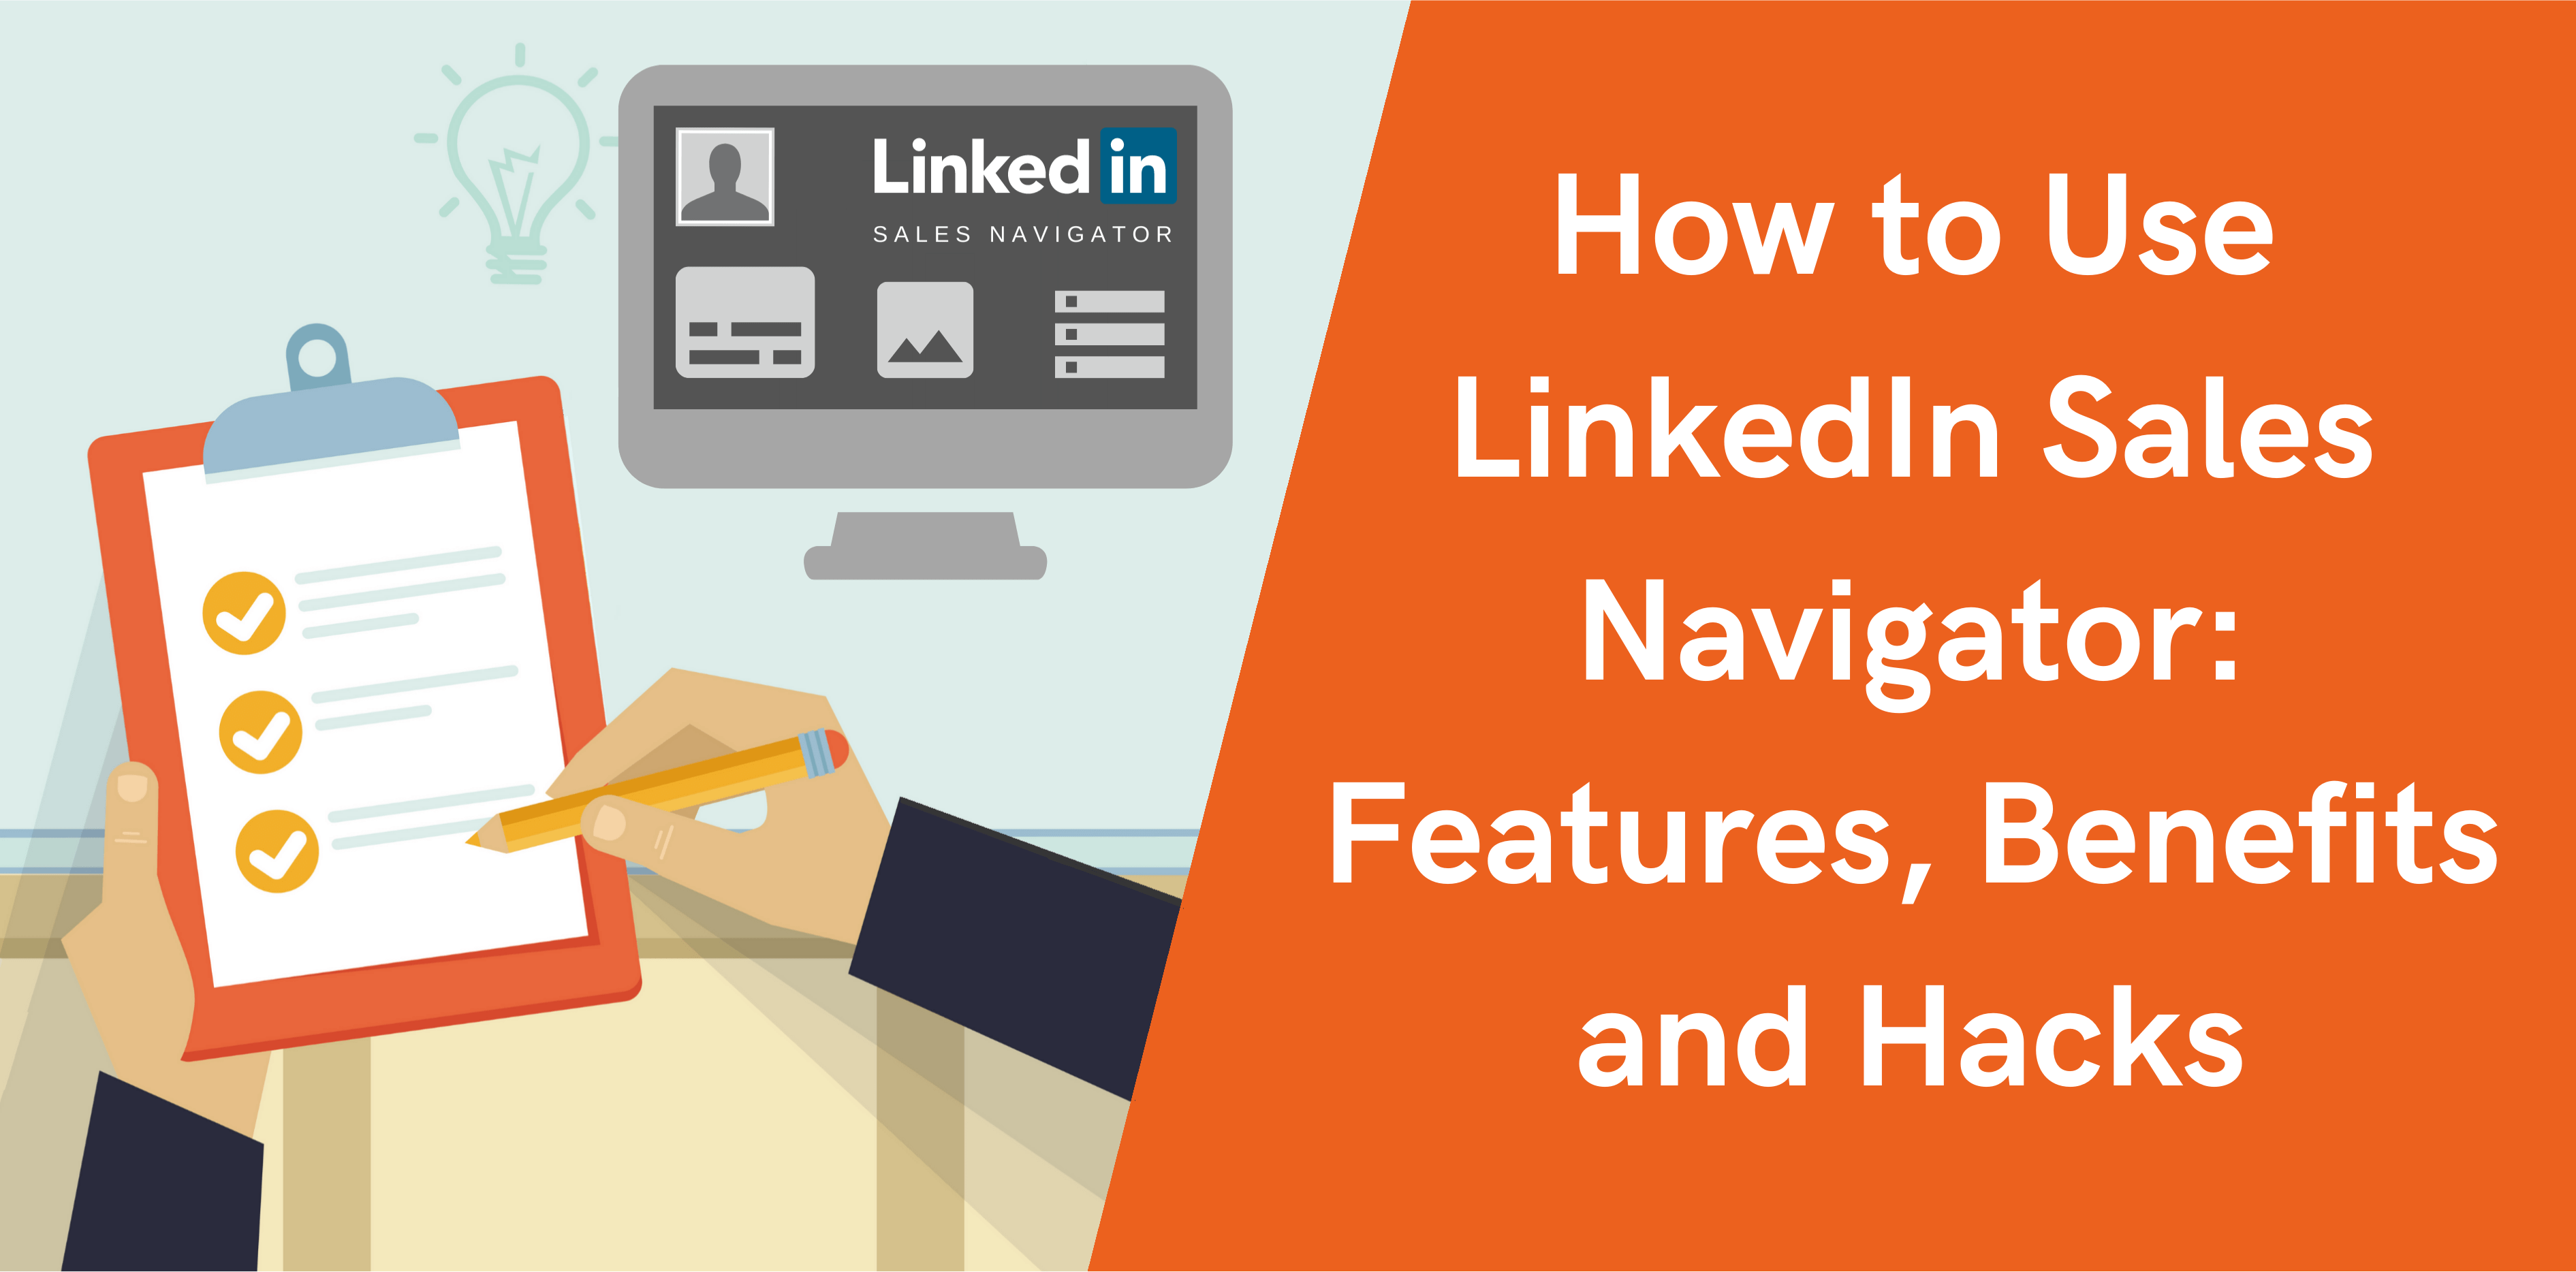 linkedin sales navigator tools